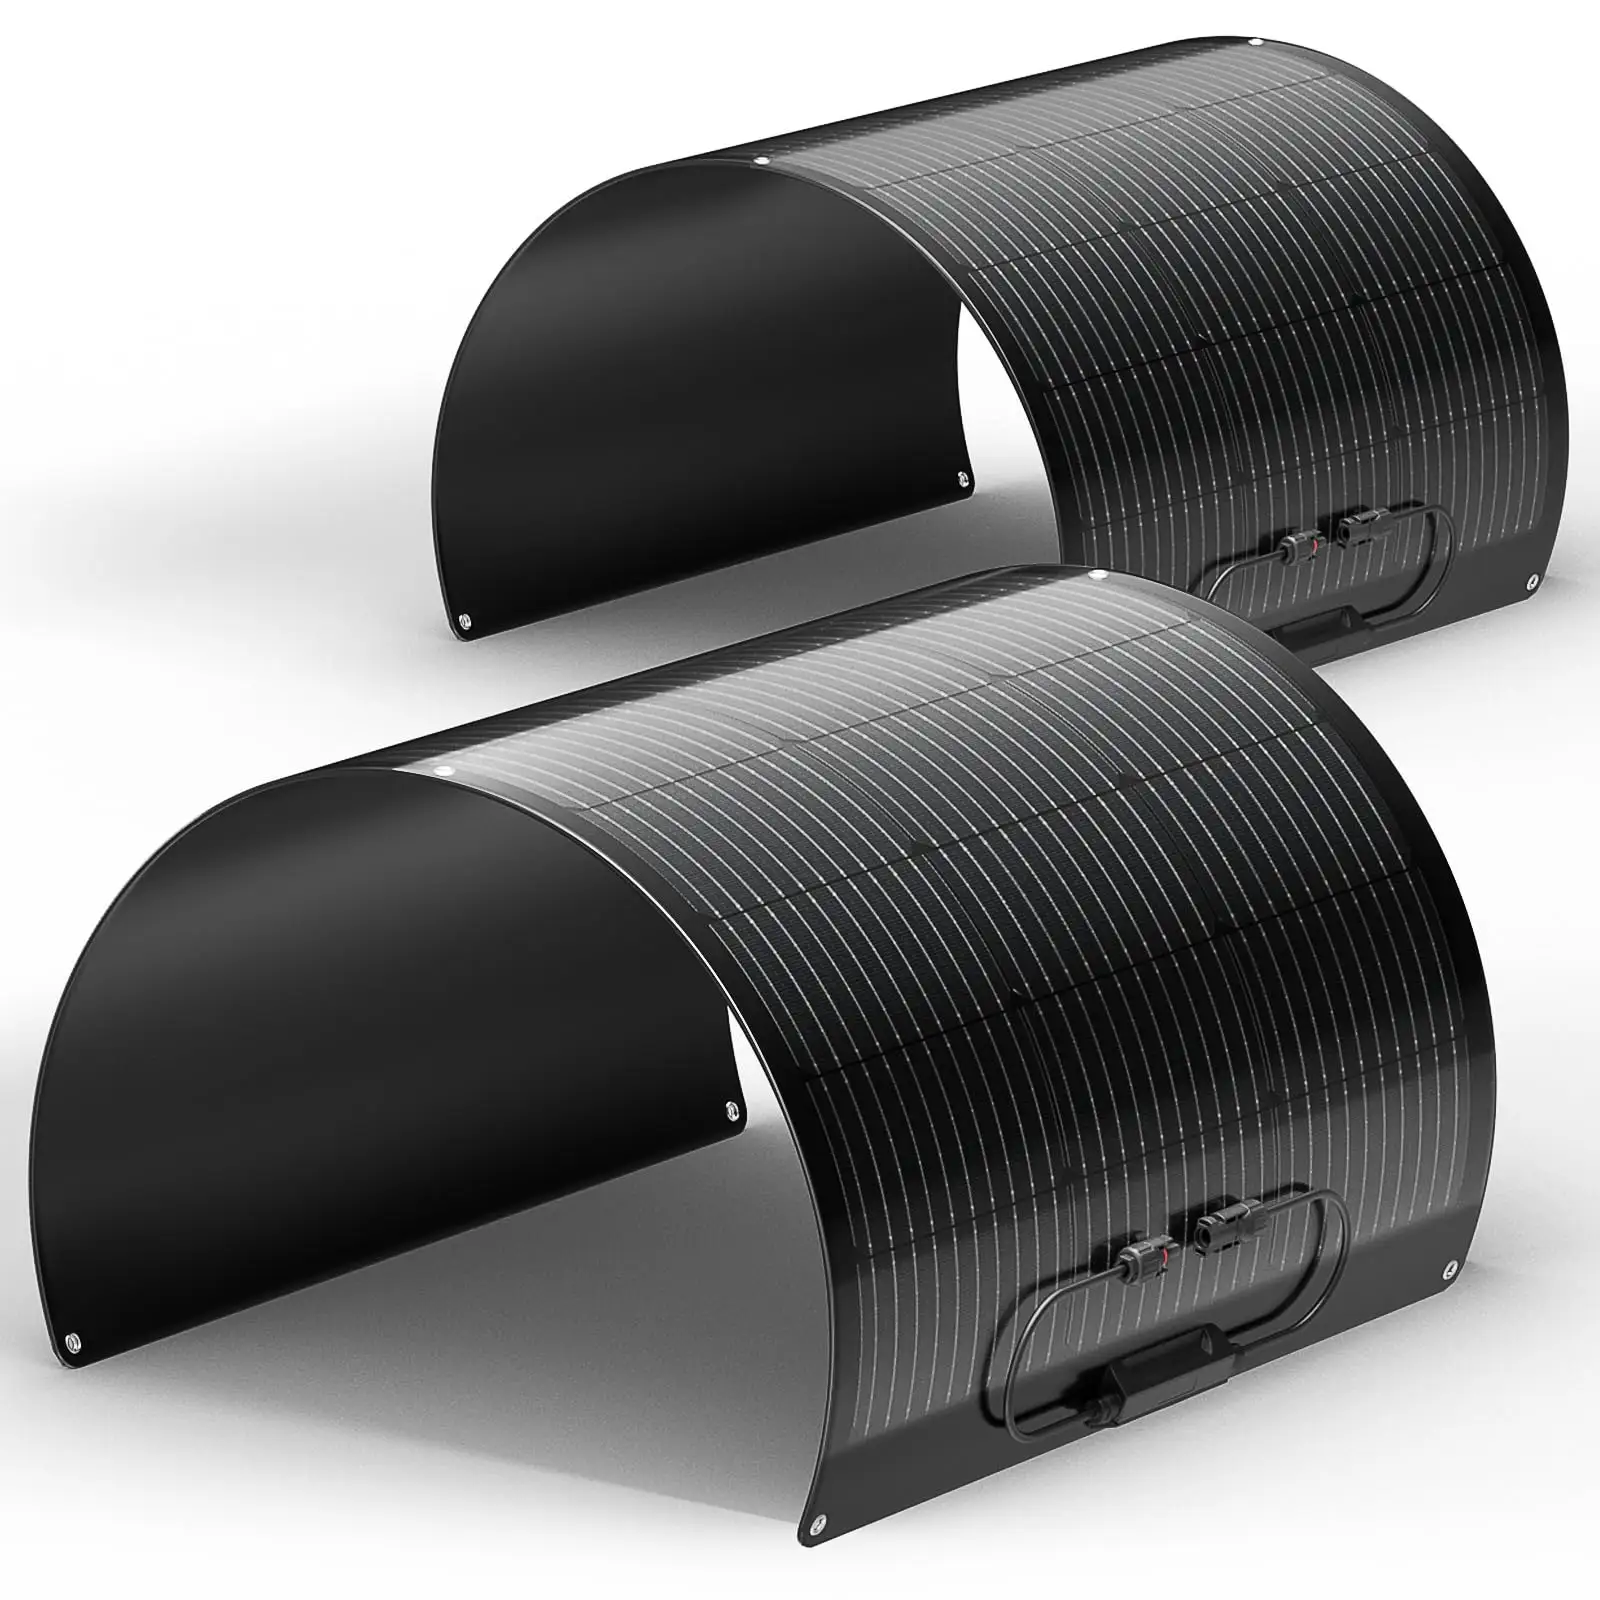 Kualitas tinggi 500W 1000W 300W 200W 60W ETFE Film tipis melengkung fleksibel Panel surya harga tinggi lipat Panneaux Solaire